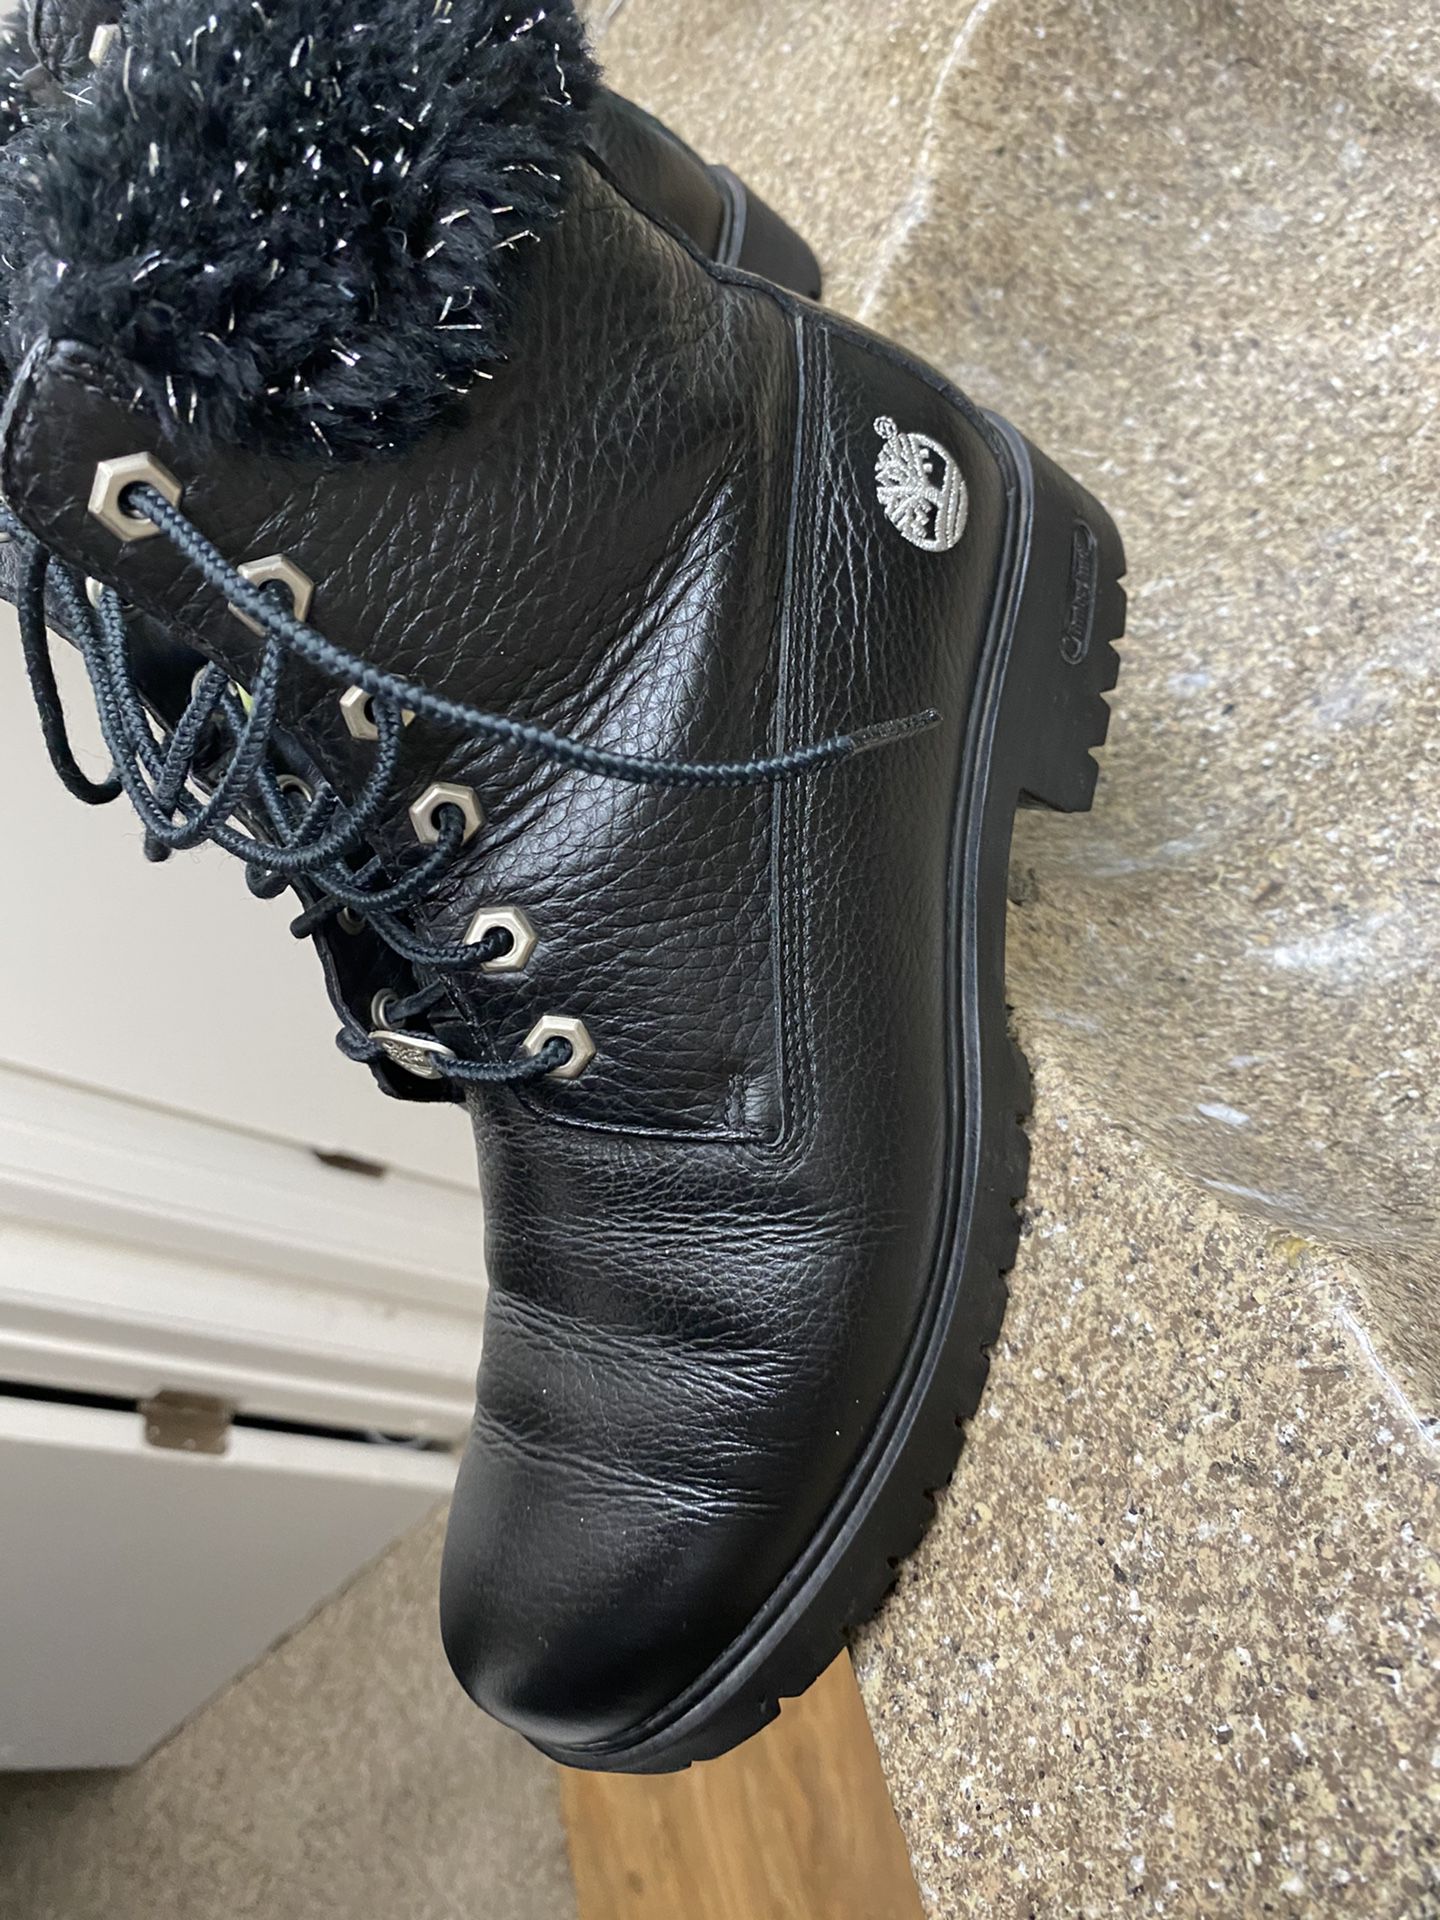 Timberlands boots black zise 8.5